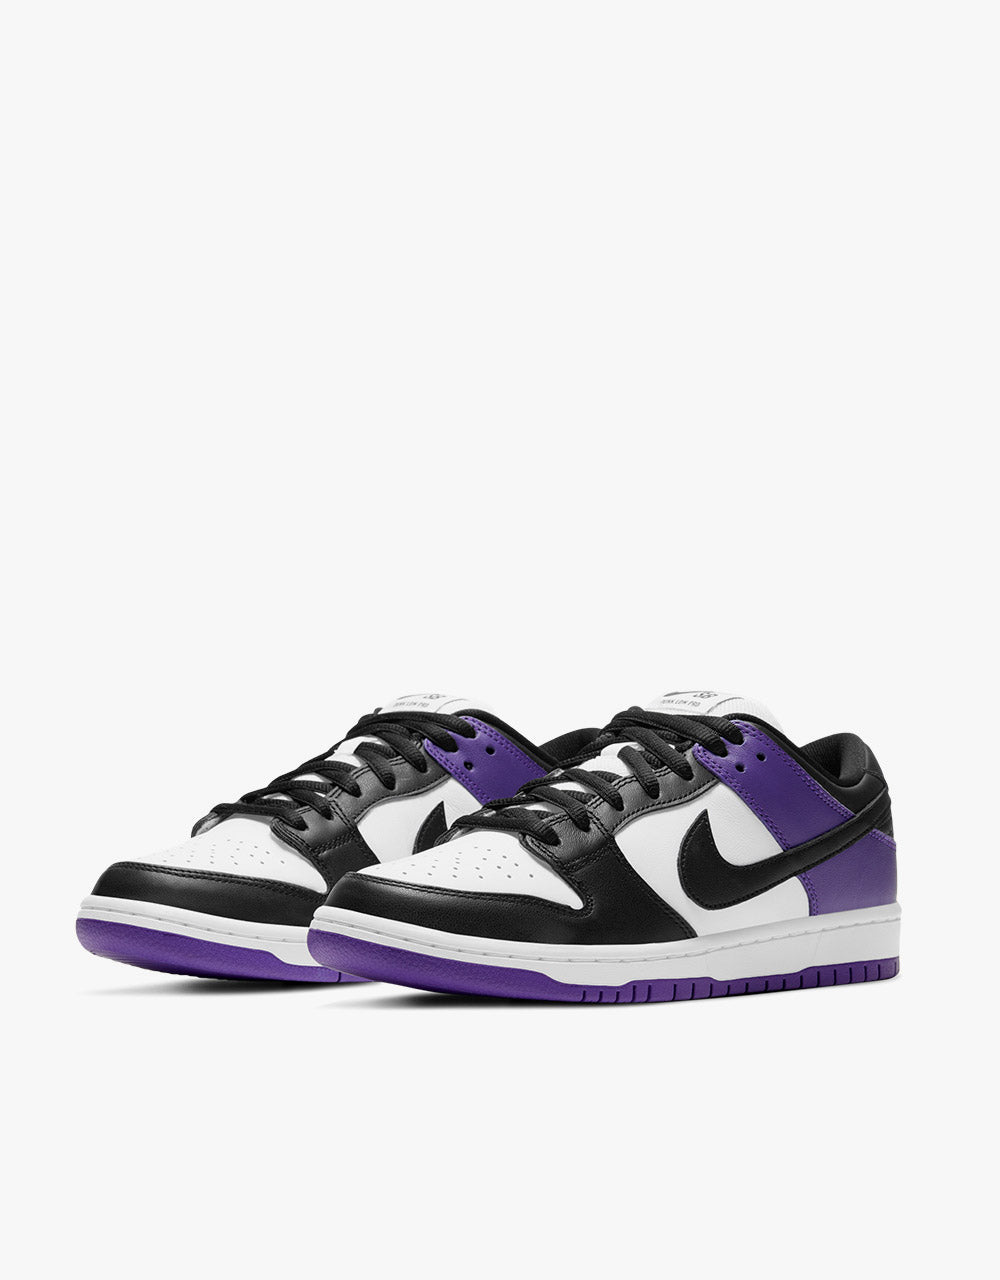 Nike SB Dunk Low Pro Skate Shoes - Court Purple/Black-White-Court Purple